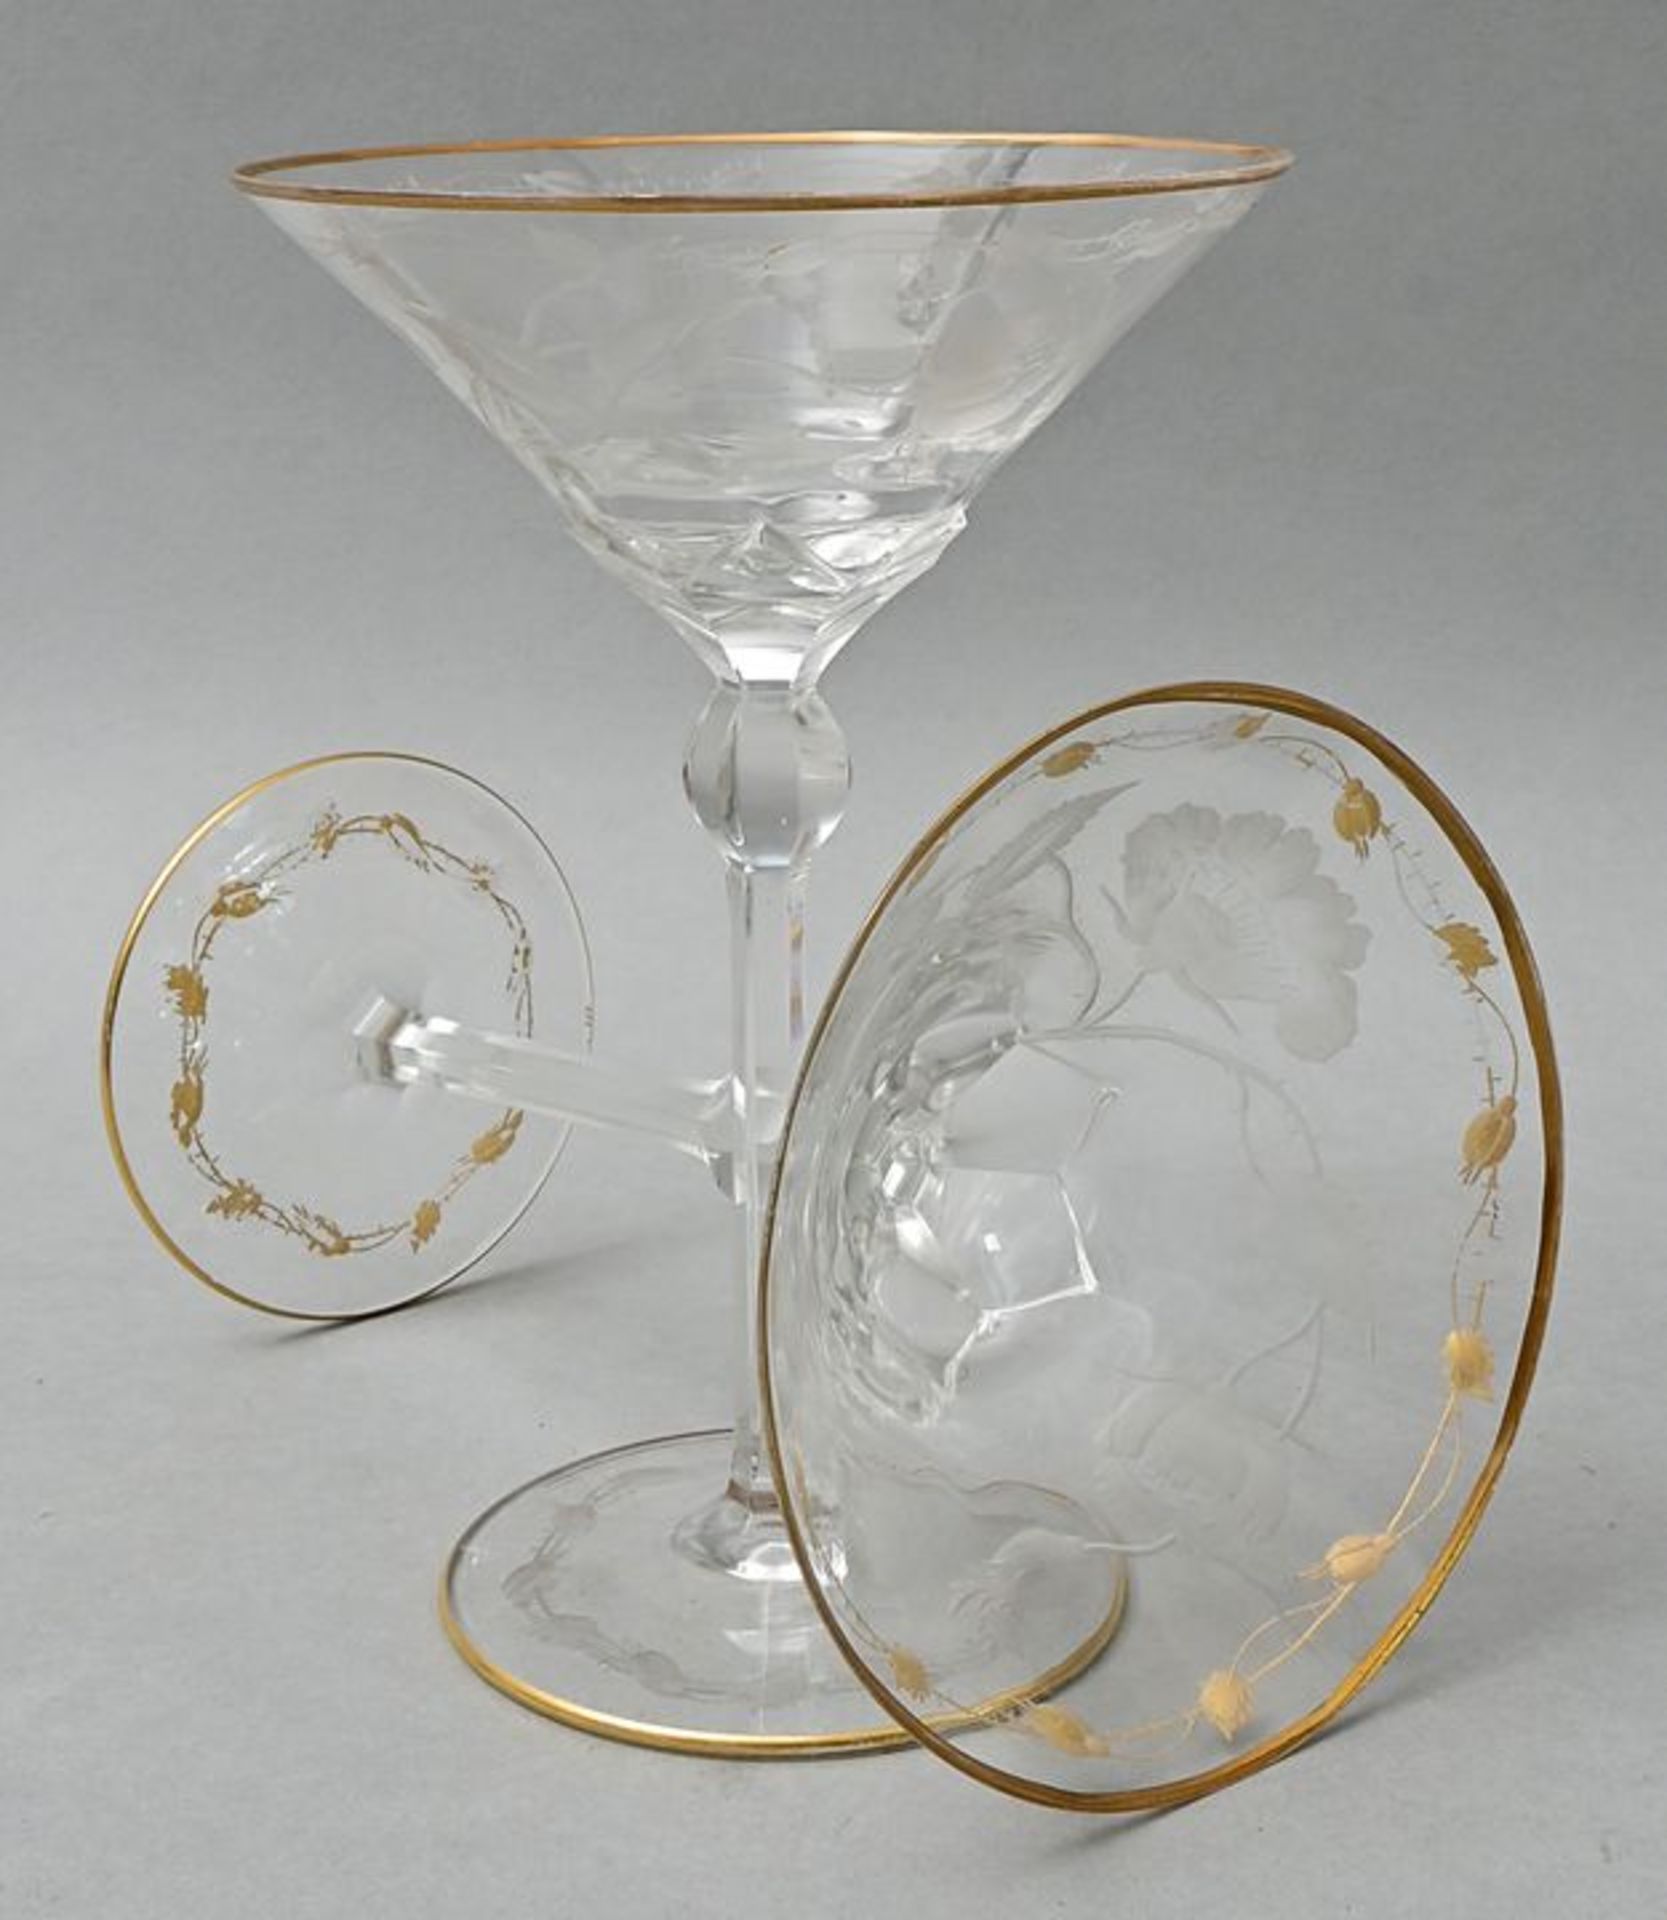 Satz Sektschalen/ champagne glasses - Bild 2 aus 3